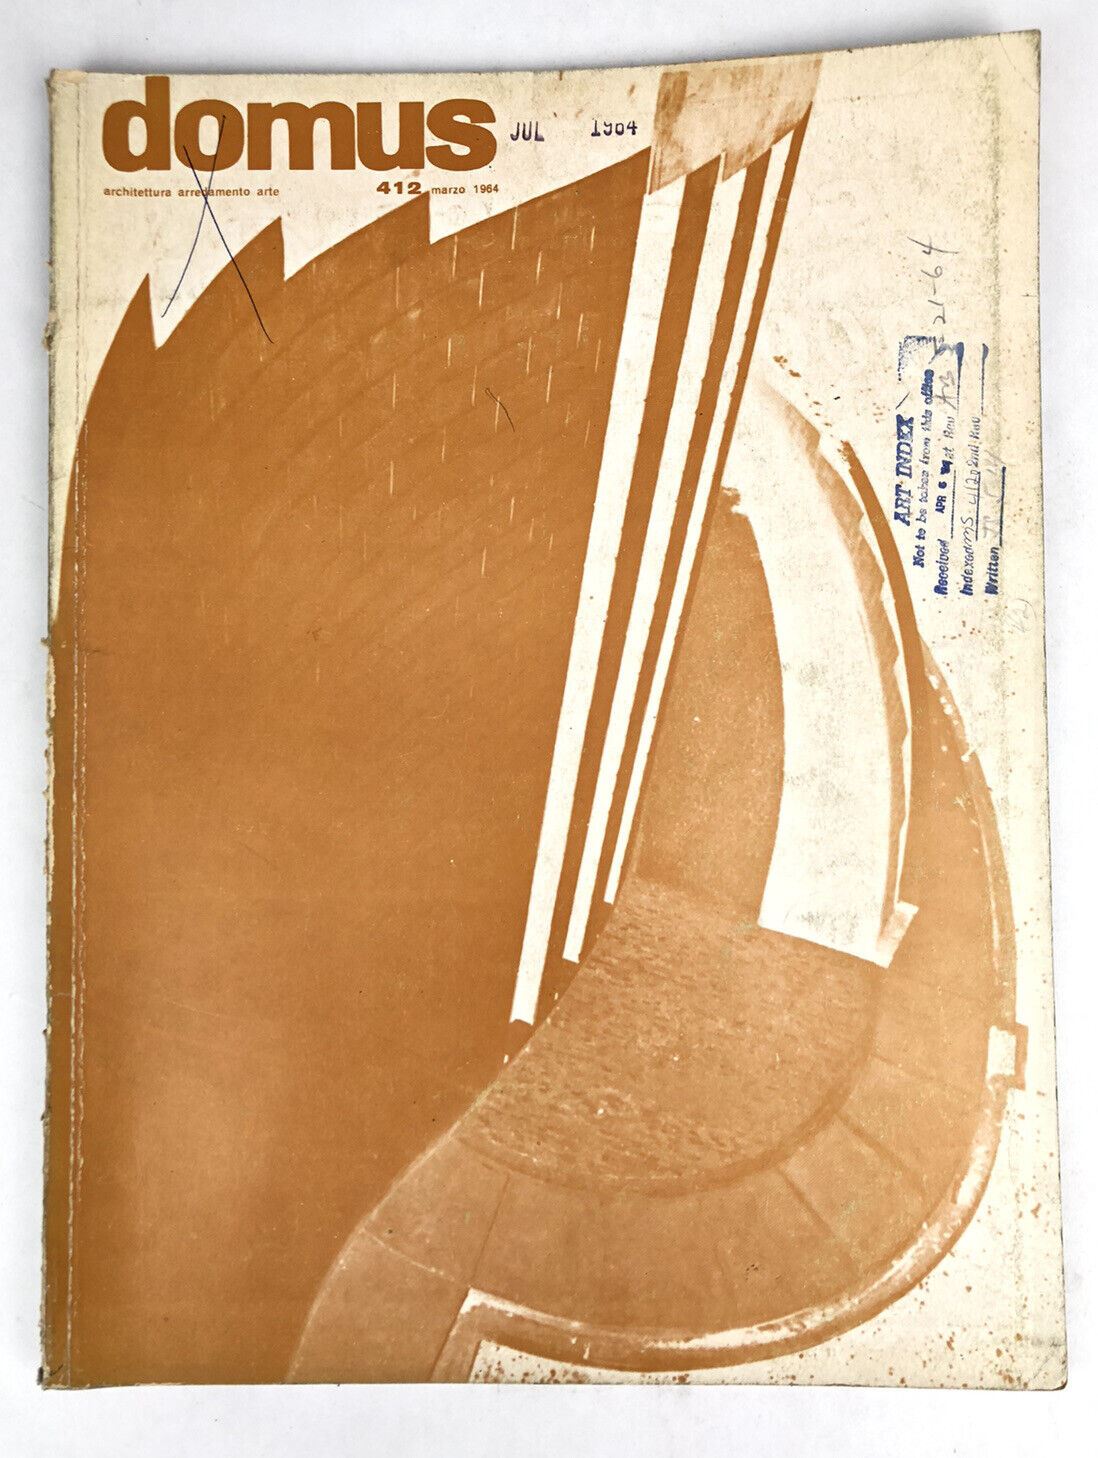 1963-1965 8 DOMUS Italian Art Architecture MAGAZINES Eames Alexander Girard MCM